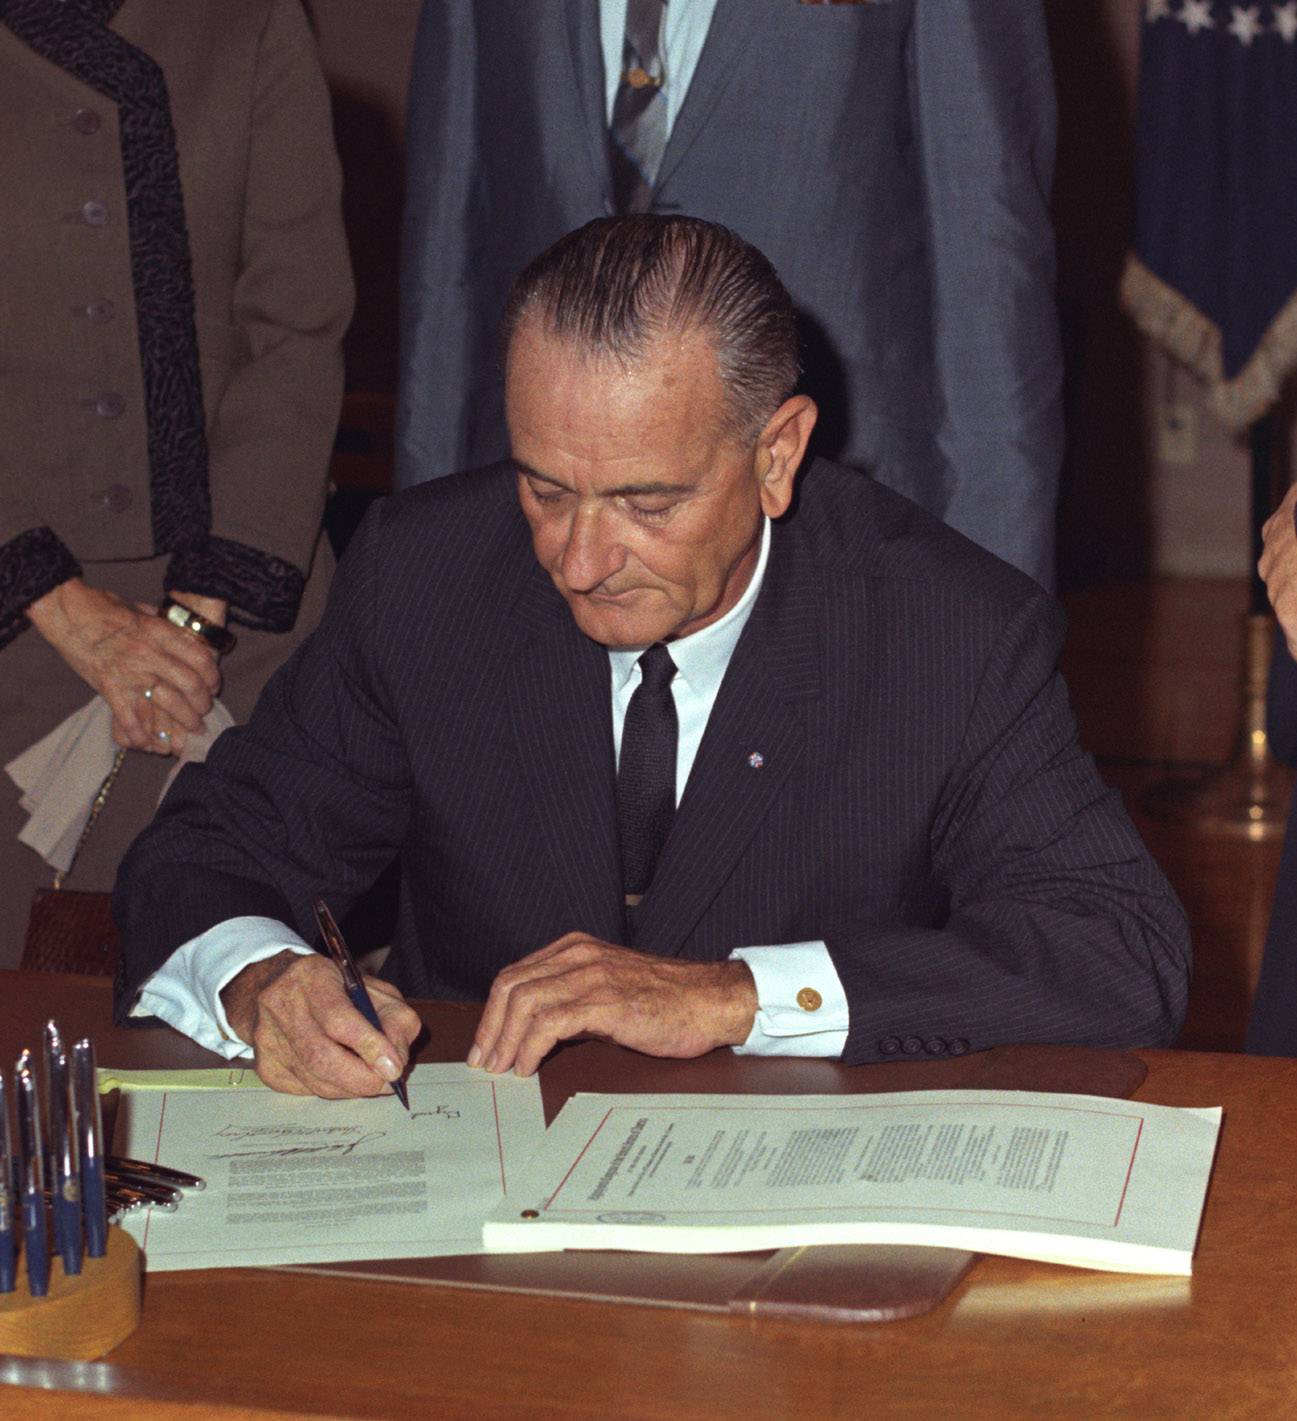 president johnson signing paperwork on wooden desk